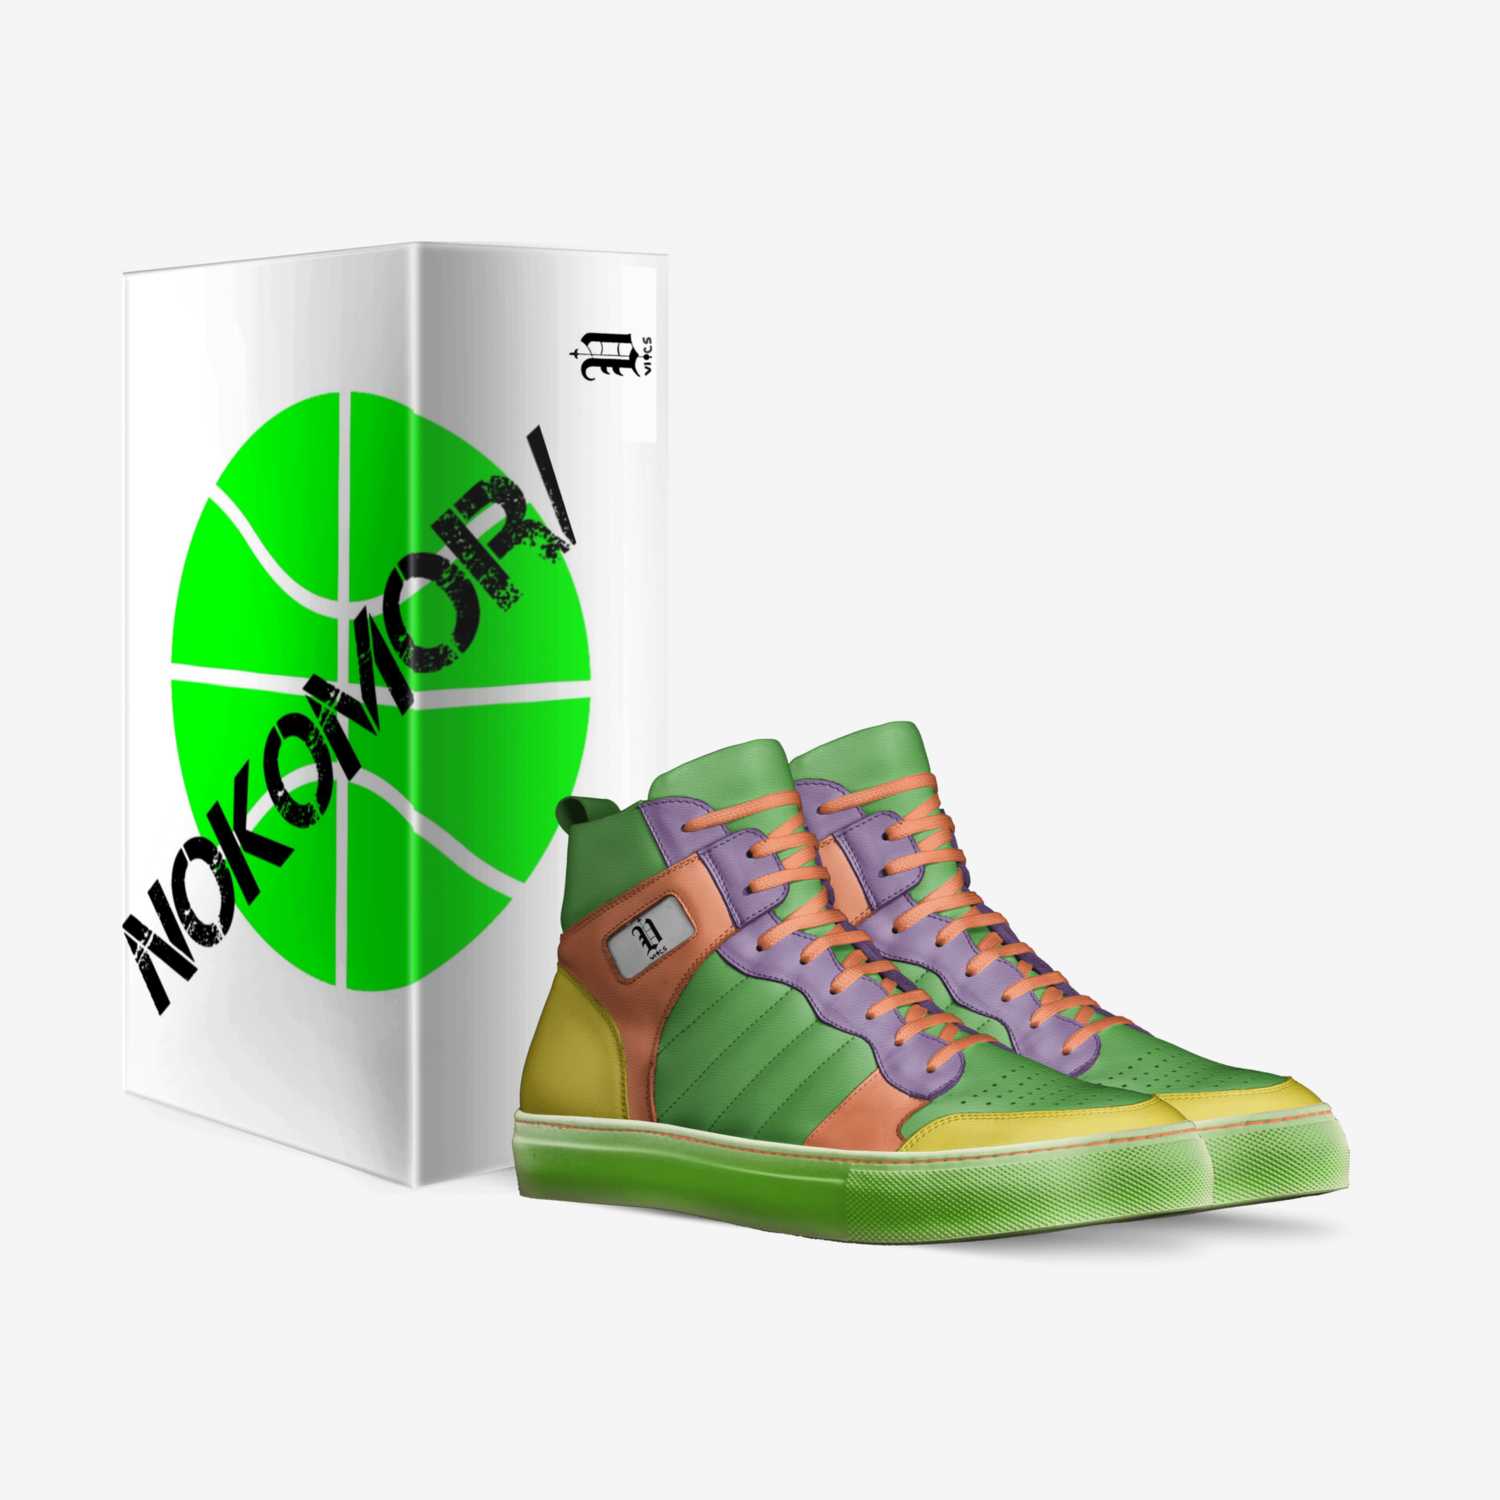 vics nokomora 2 custom made in Italy shoes by Brayden Murphy | Box view